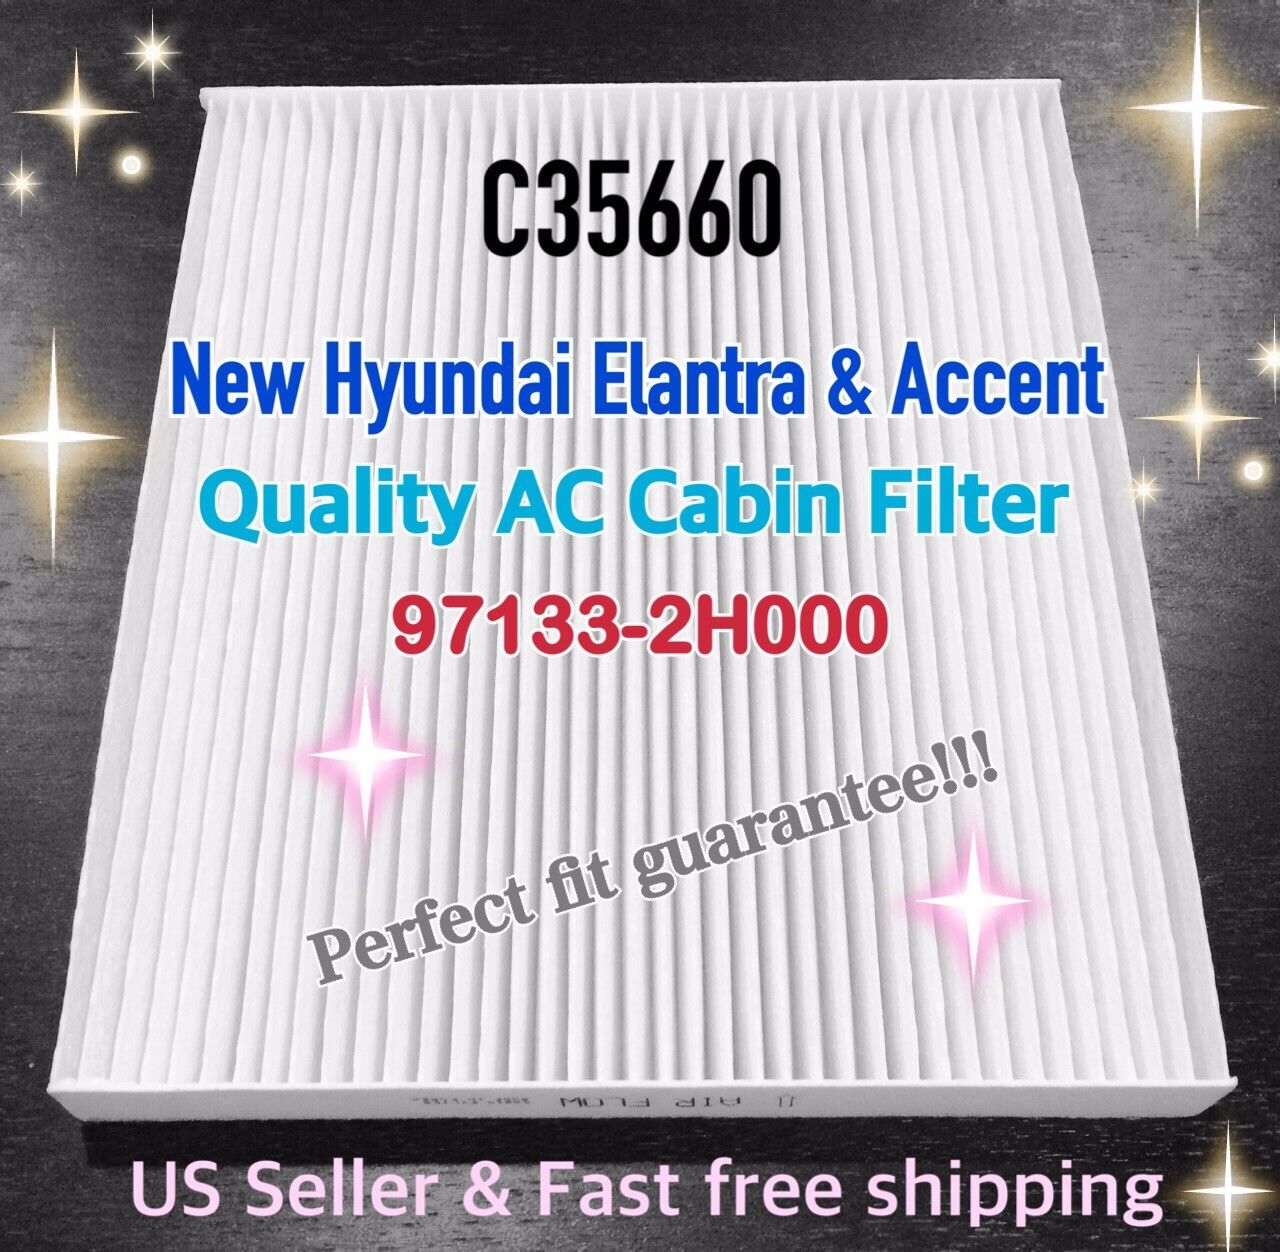 HYUNDAI 07-16 Elantra & 11 Accent C35660 AC CABIN FILTER Free Fast Shipping @_@